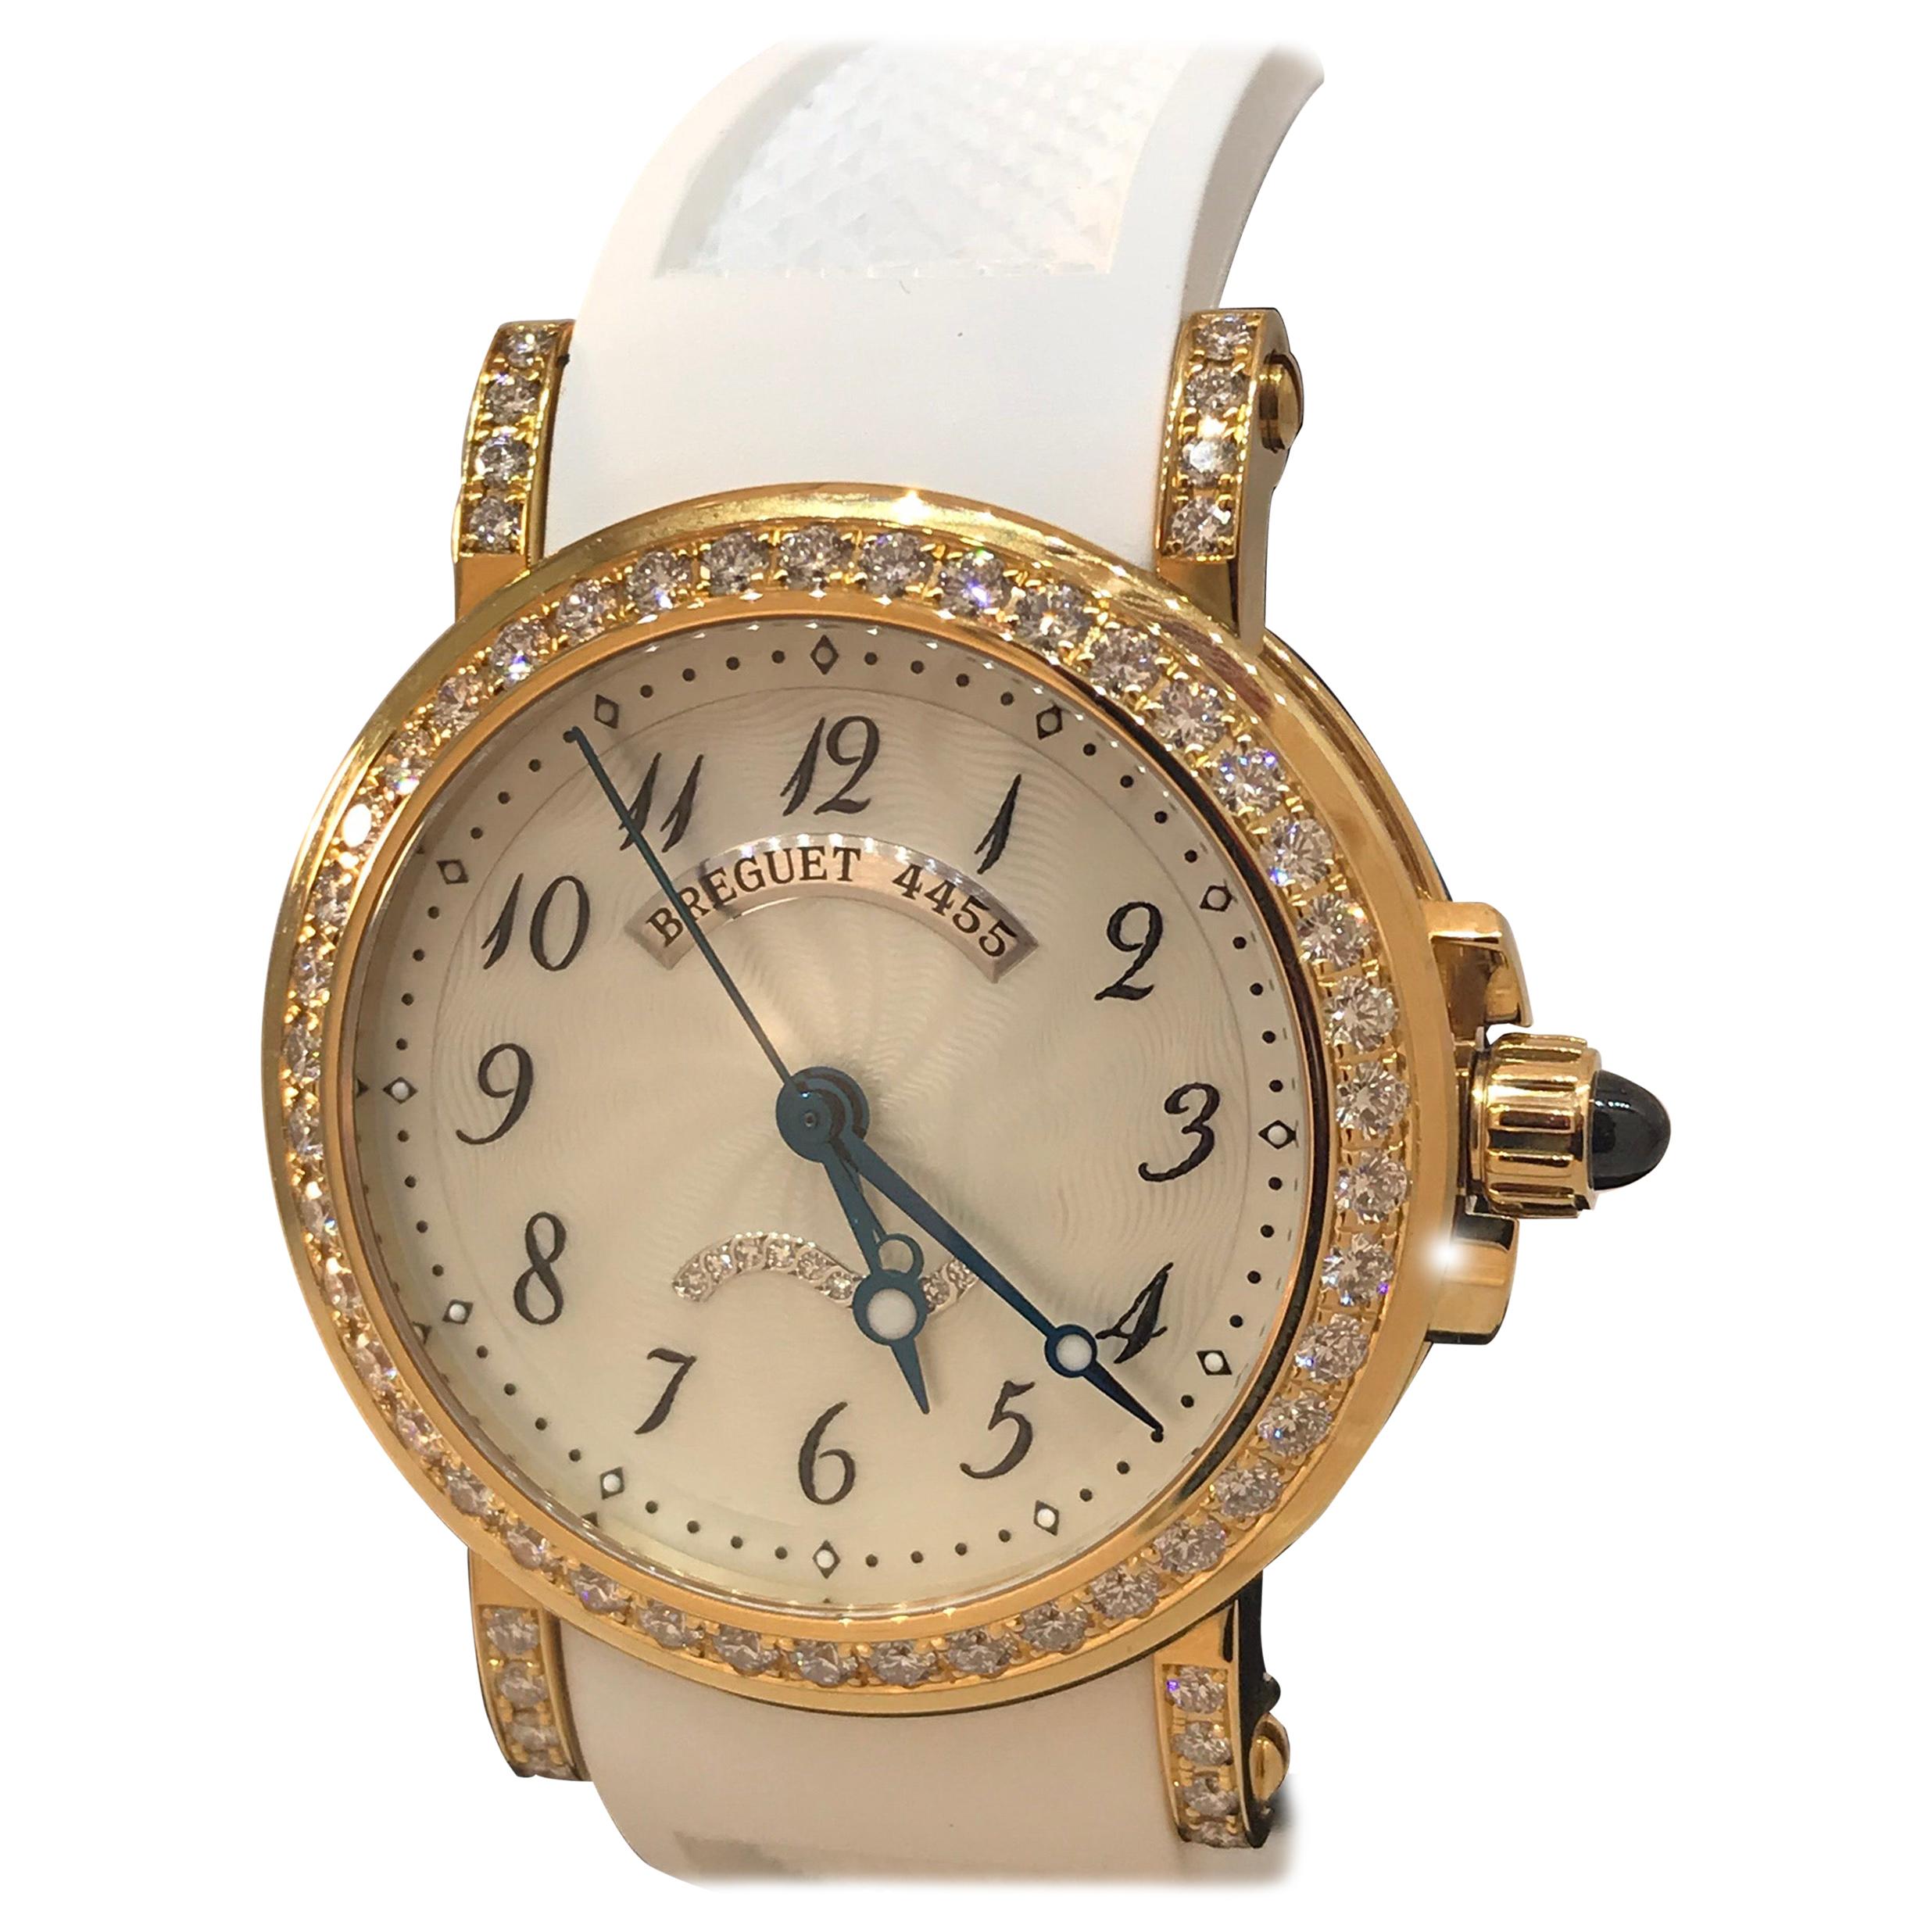 Breguet Marine Yellow Gold Diamond Bezel Ladies Watch 8818ba/59/564.dd00 New For Sale